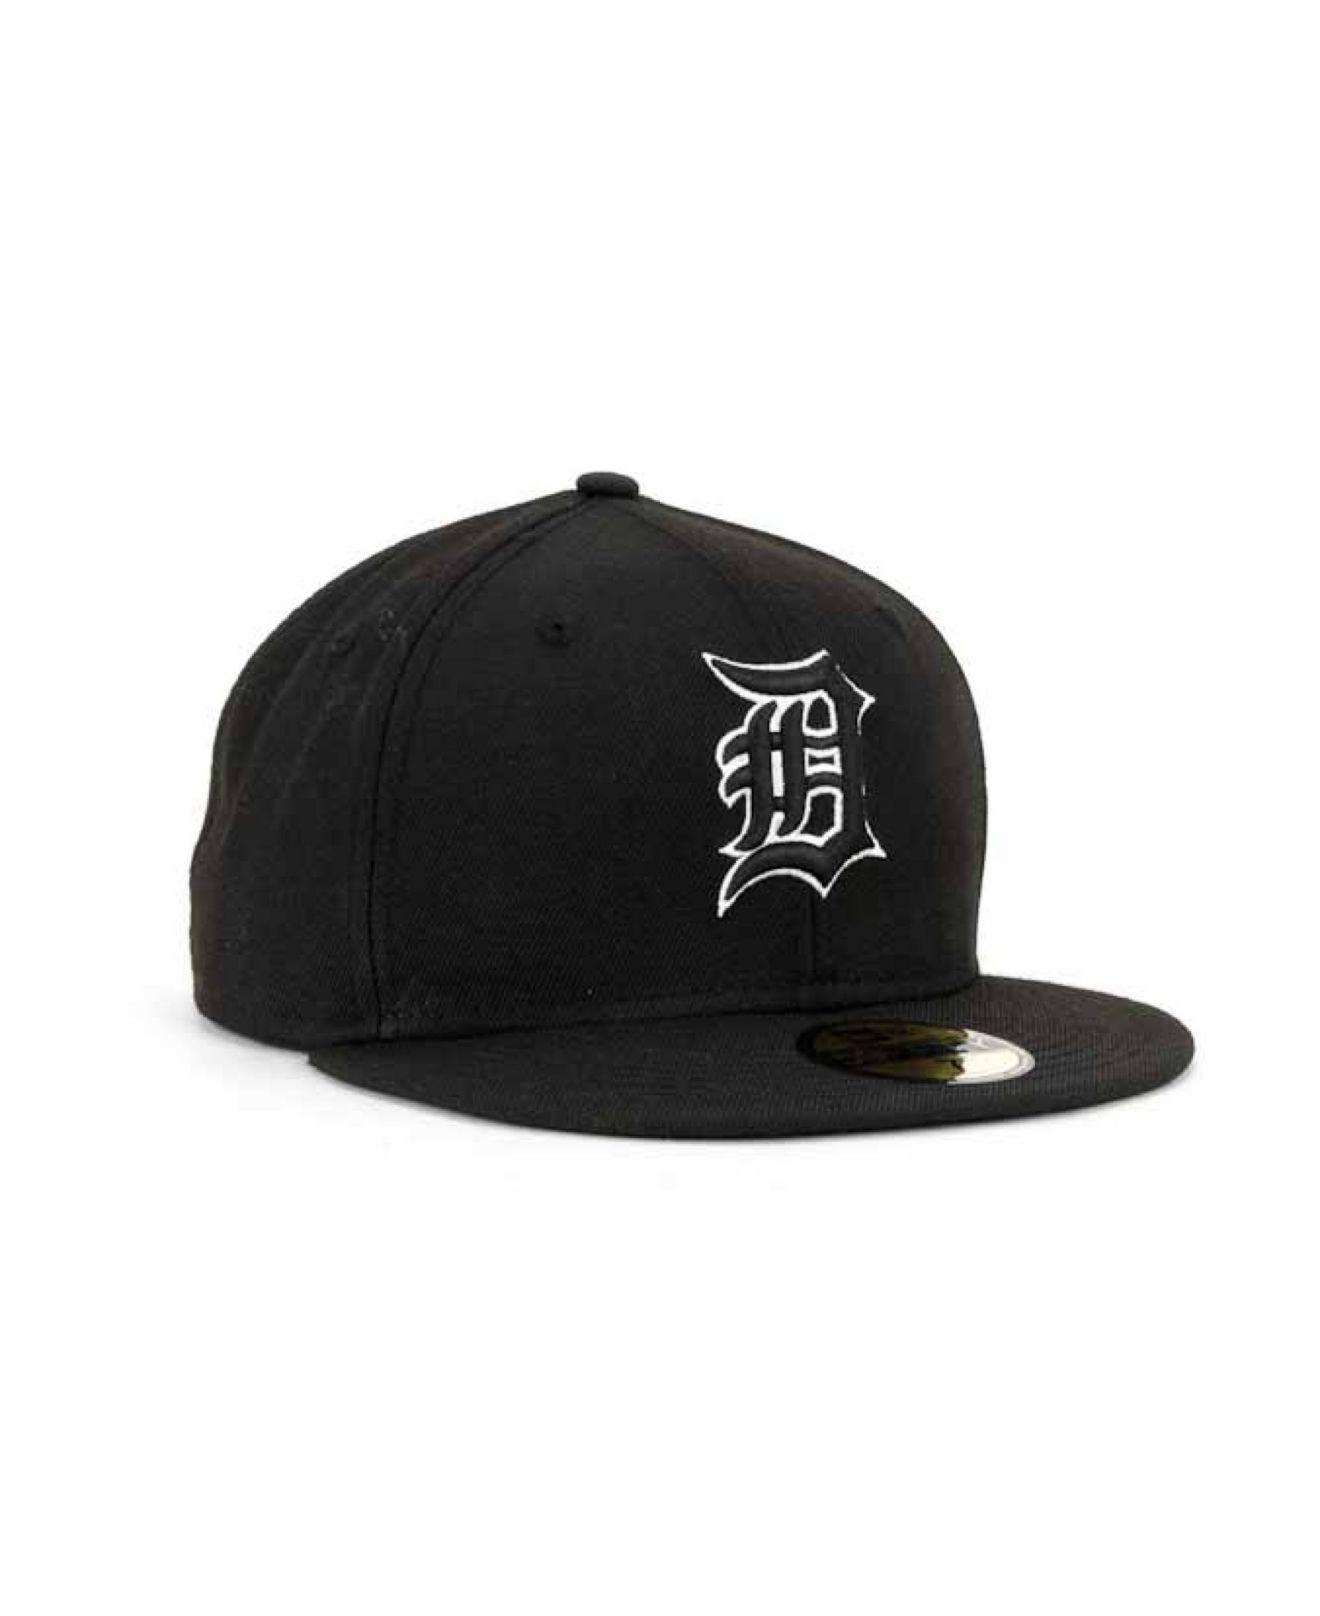 KTZ Detroit Tigers Black And White Fashion 59fifty Cap for Men